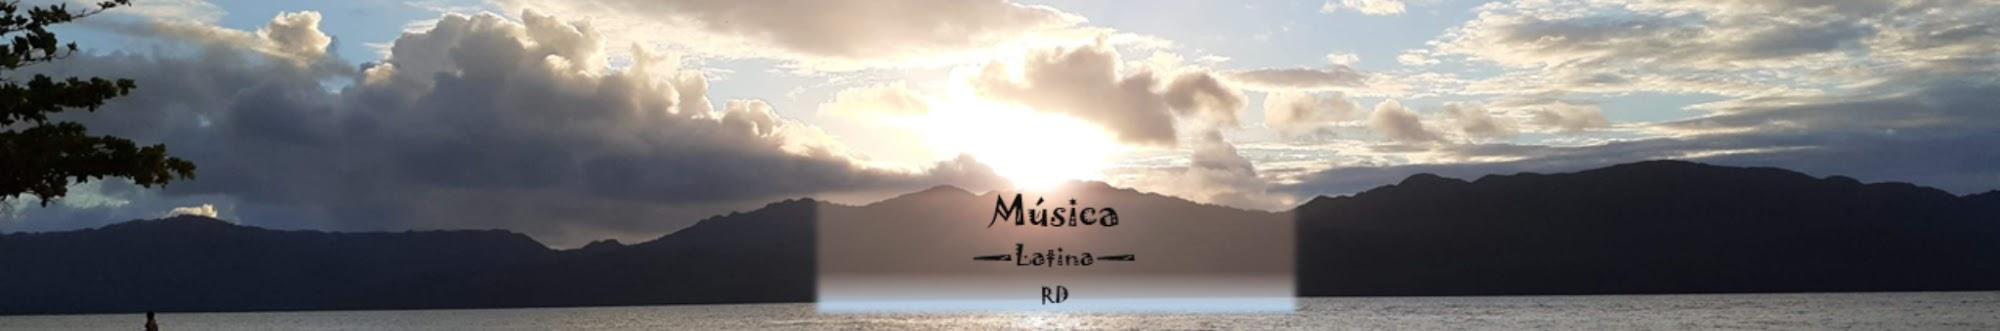 Musica Latina RD